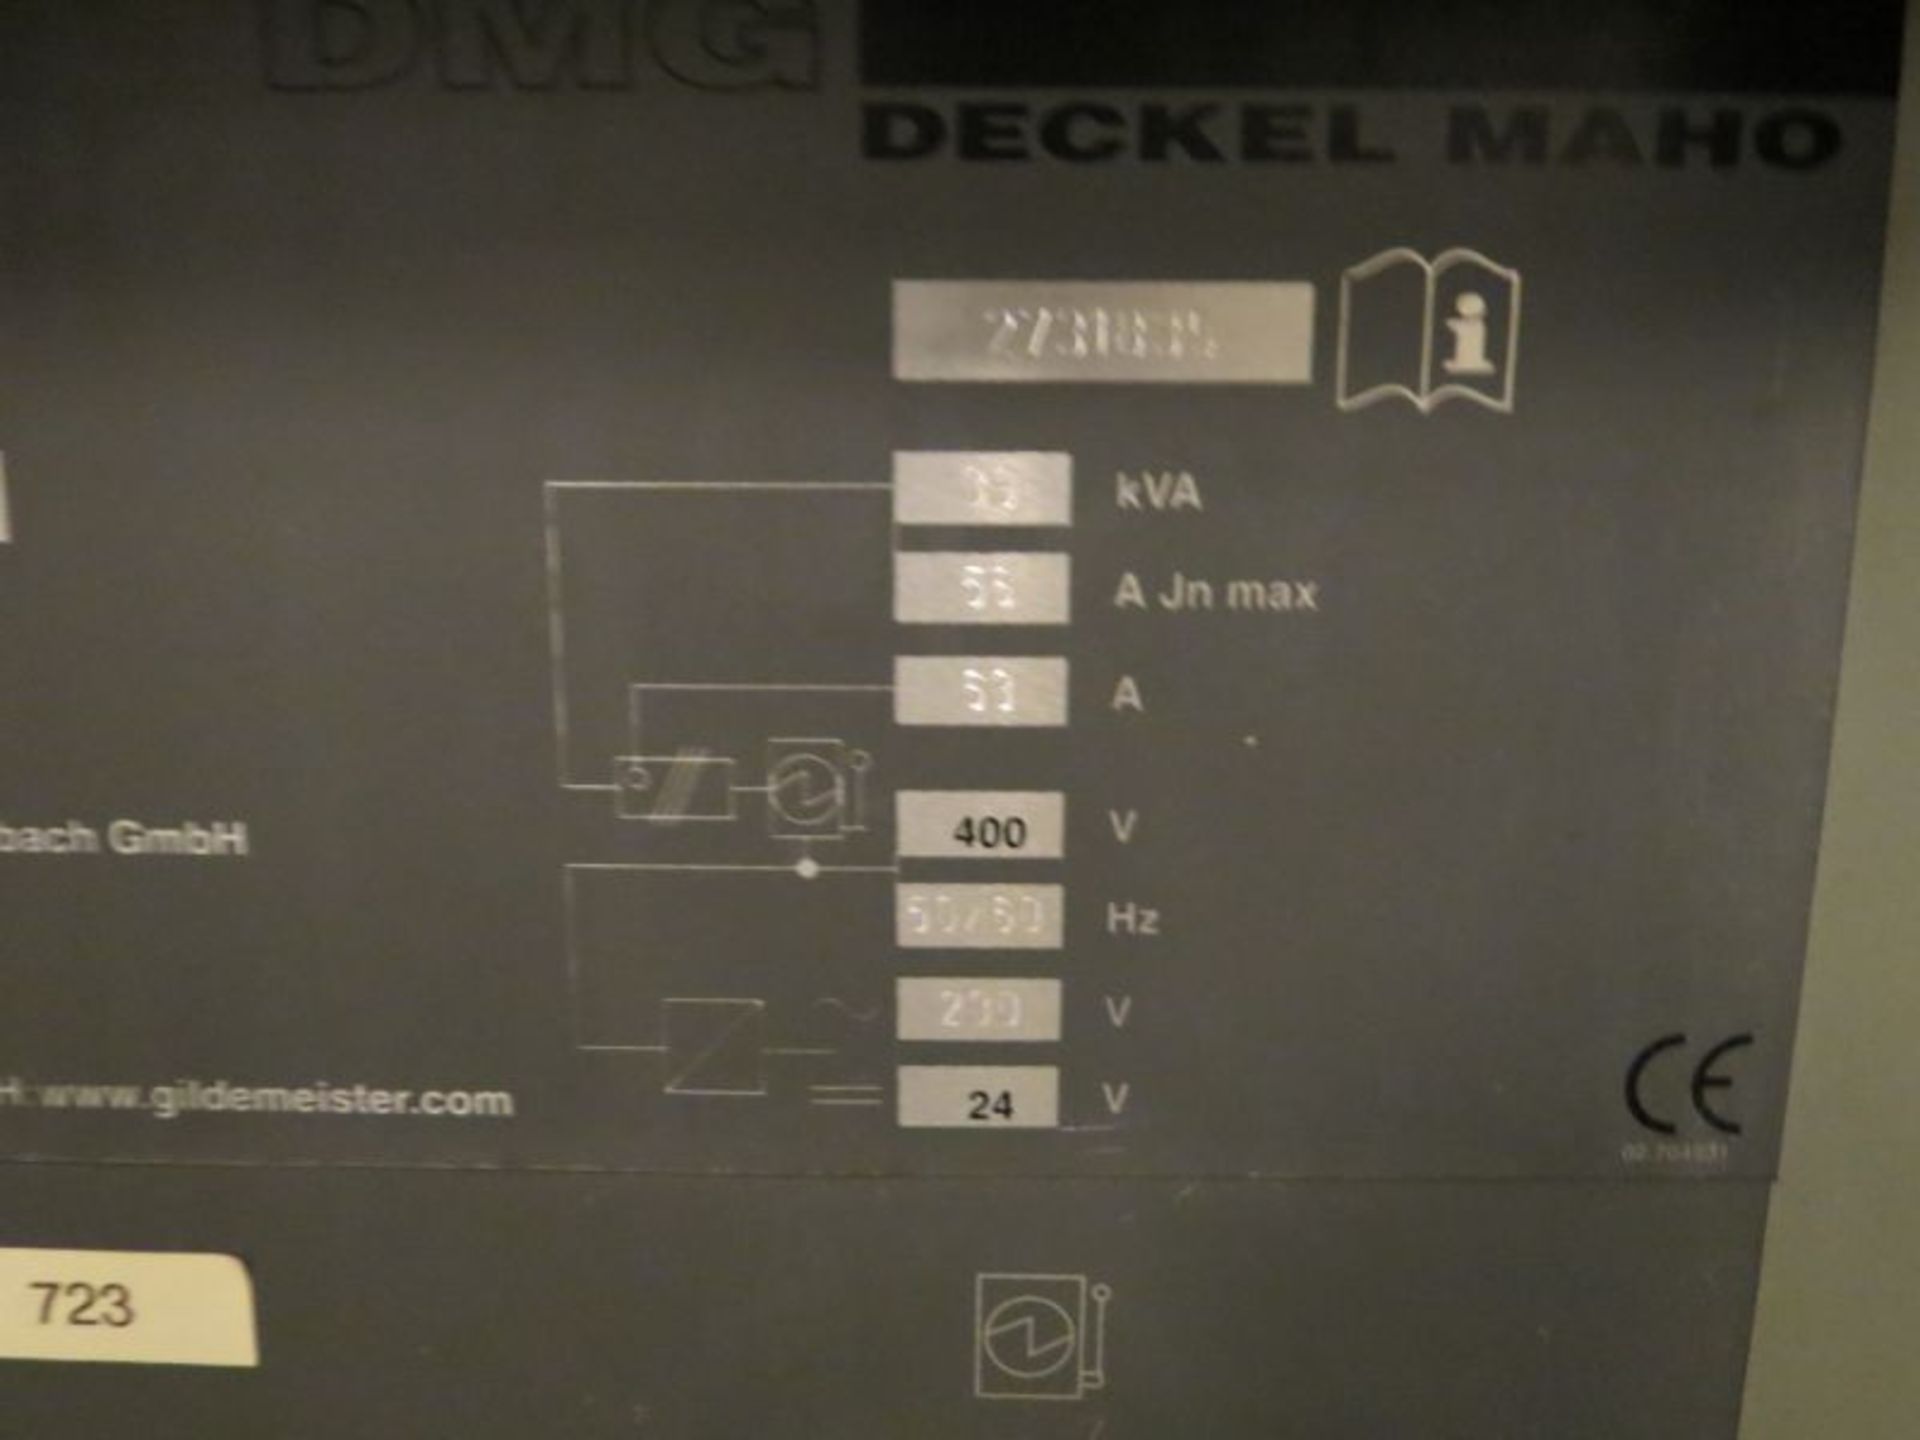 DMG Deckel Maho DMC 104V Linear 4-Axis CNC VMC, Fanuc 32i, w/ Chip Conveyor, (Trunion Sold Seperate) - Image 10 of 10